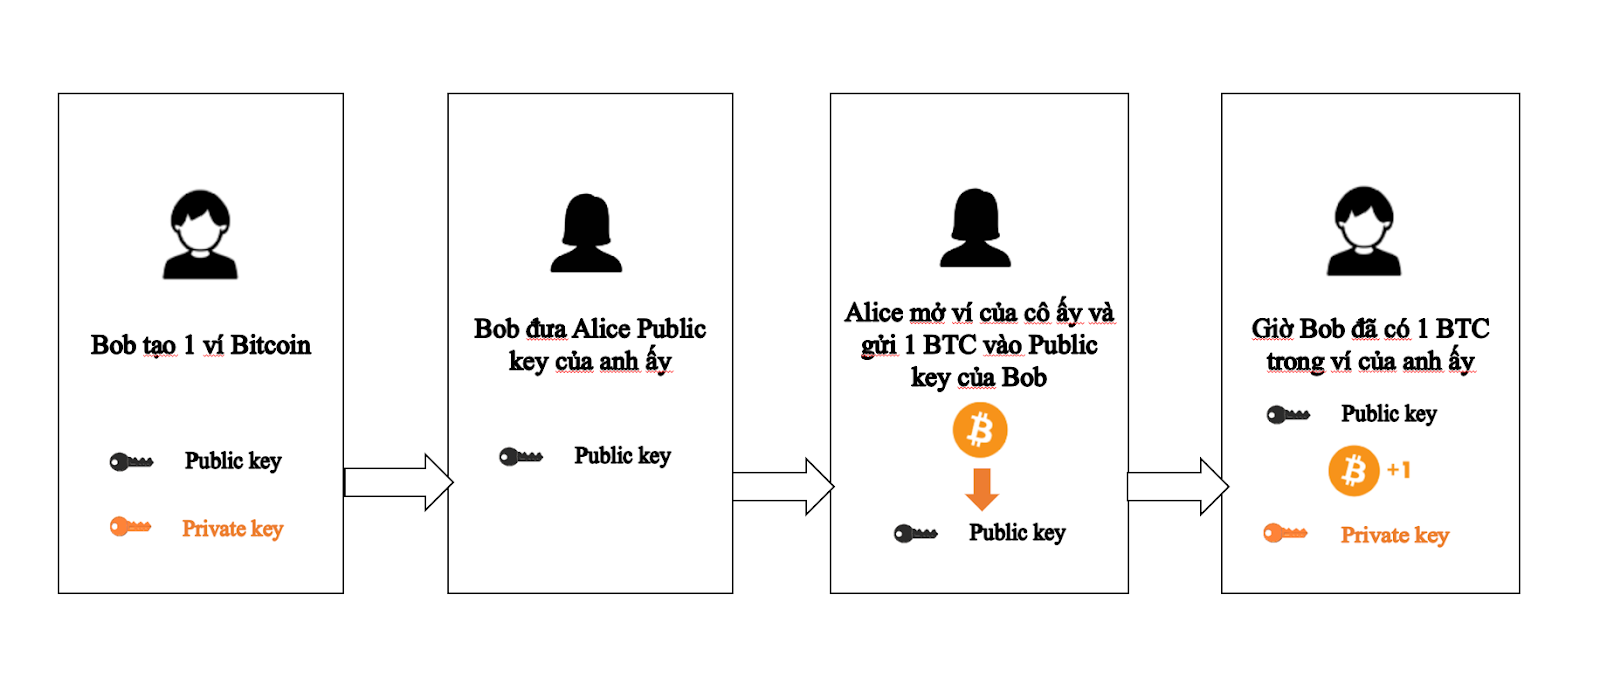 public key và private key